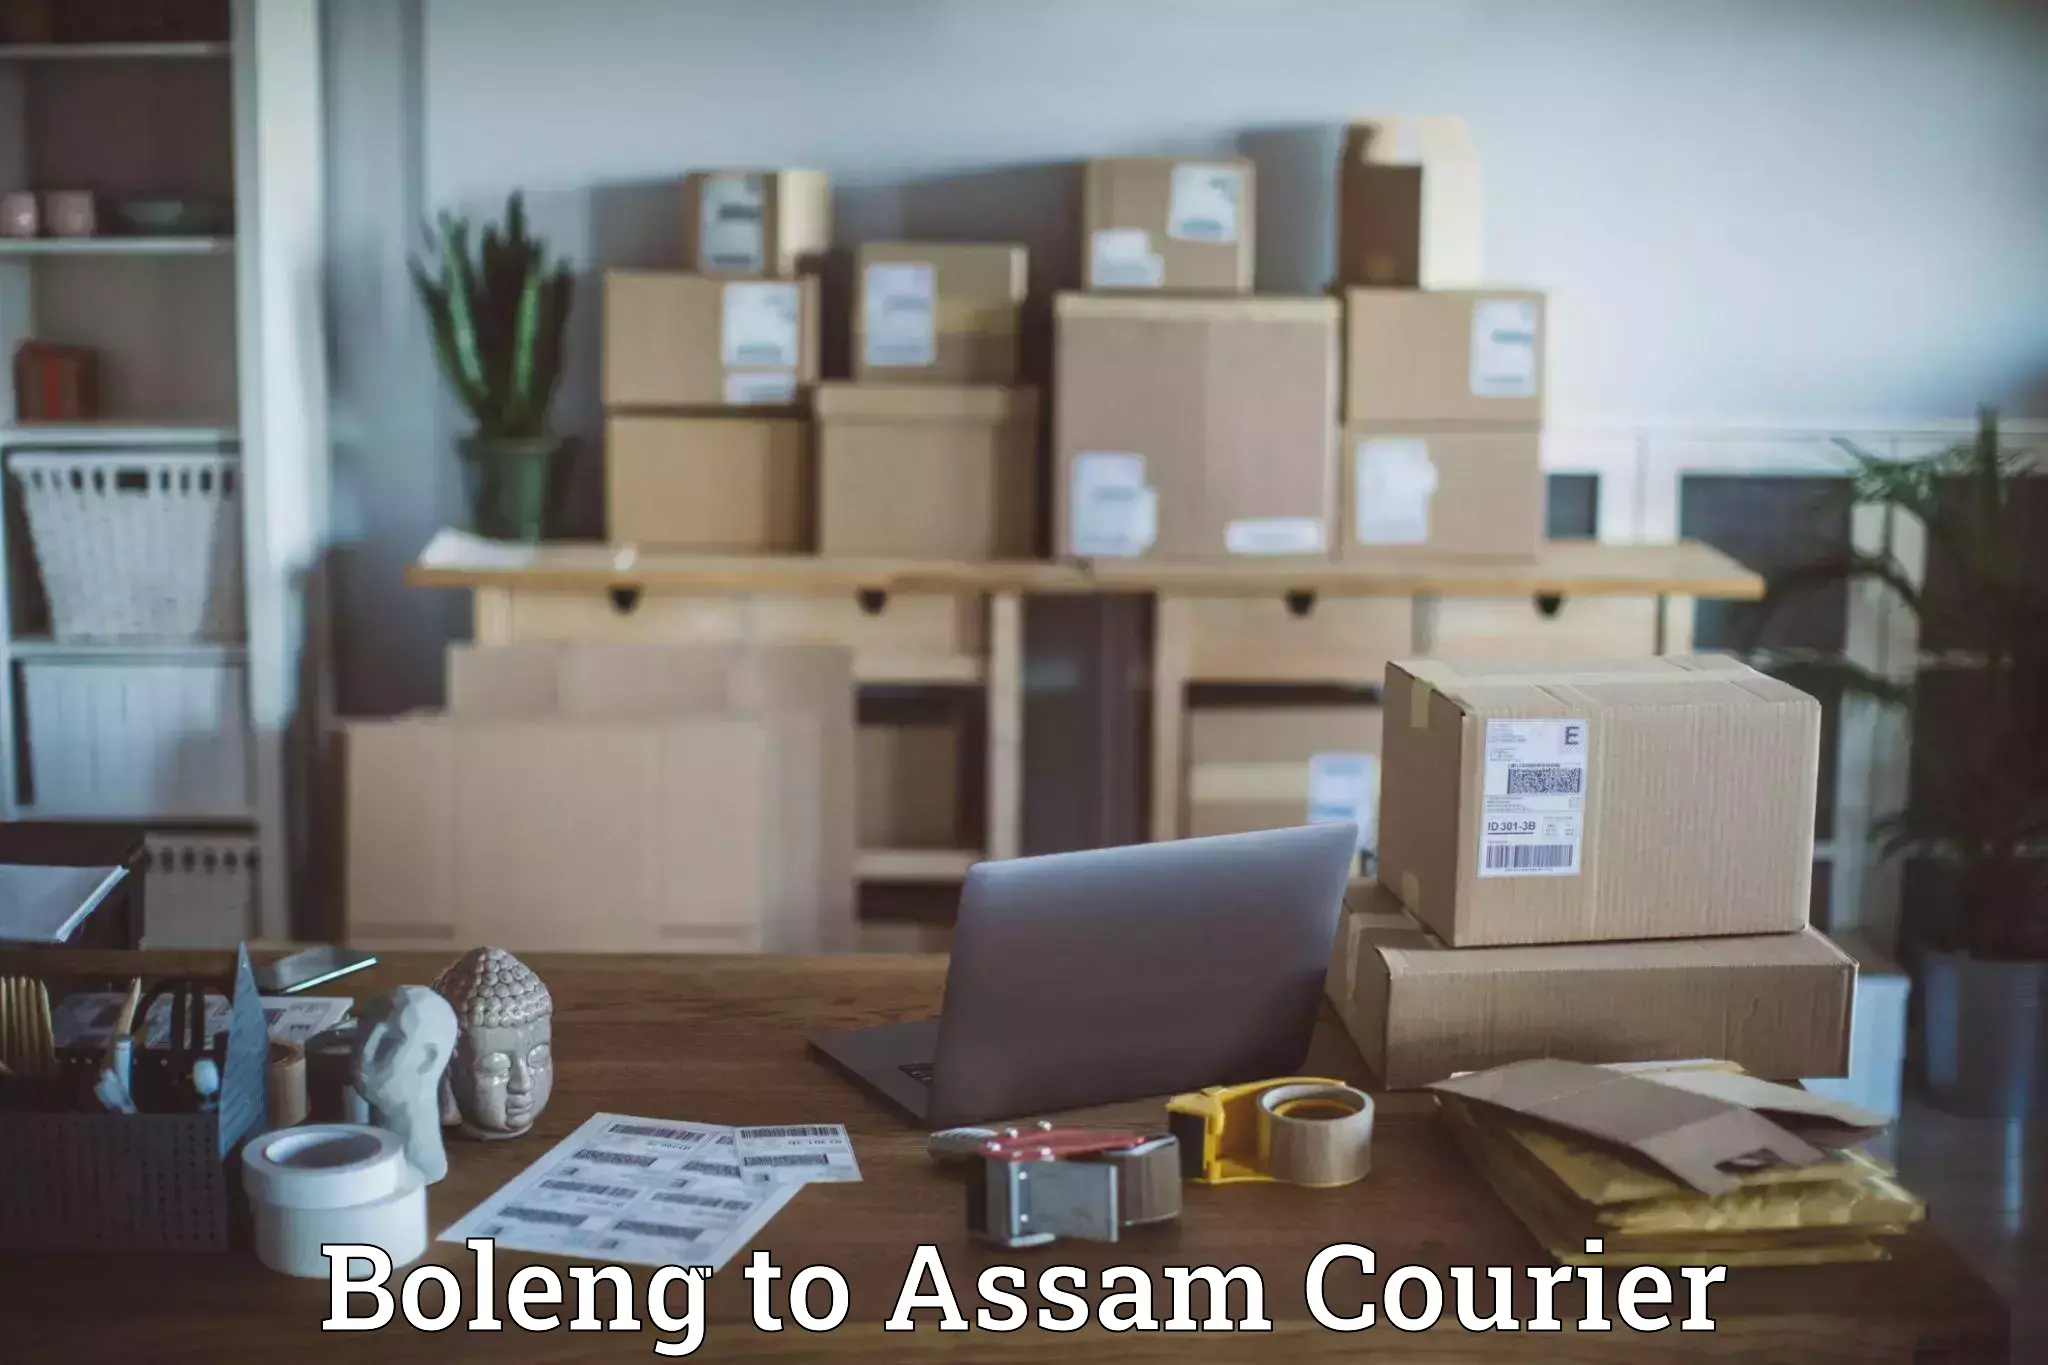 Global courier networks Boleng to Assam